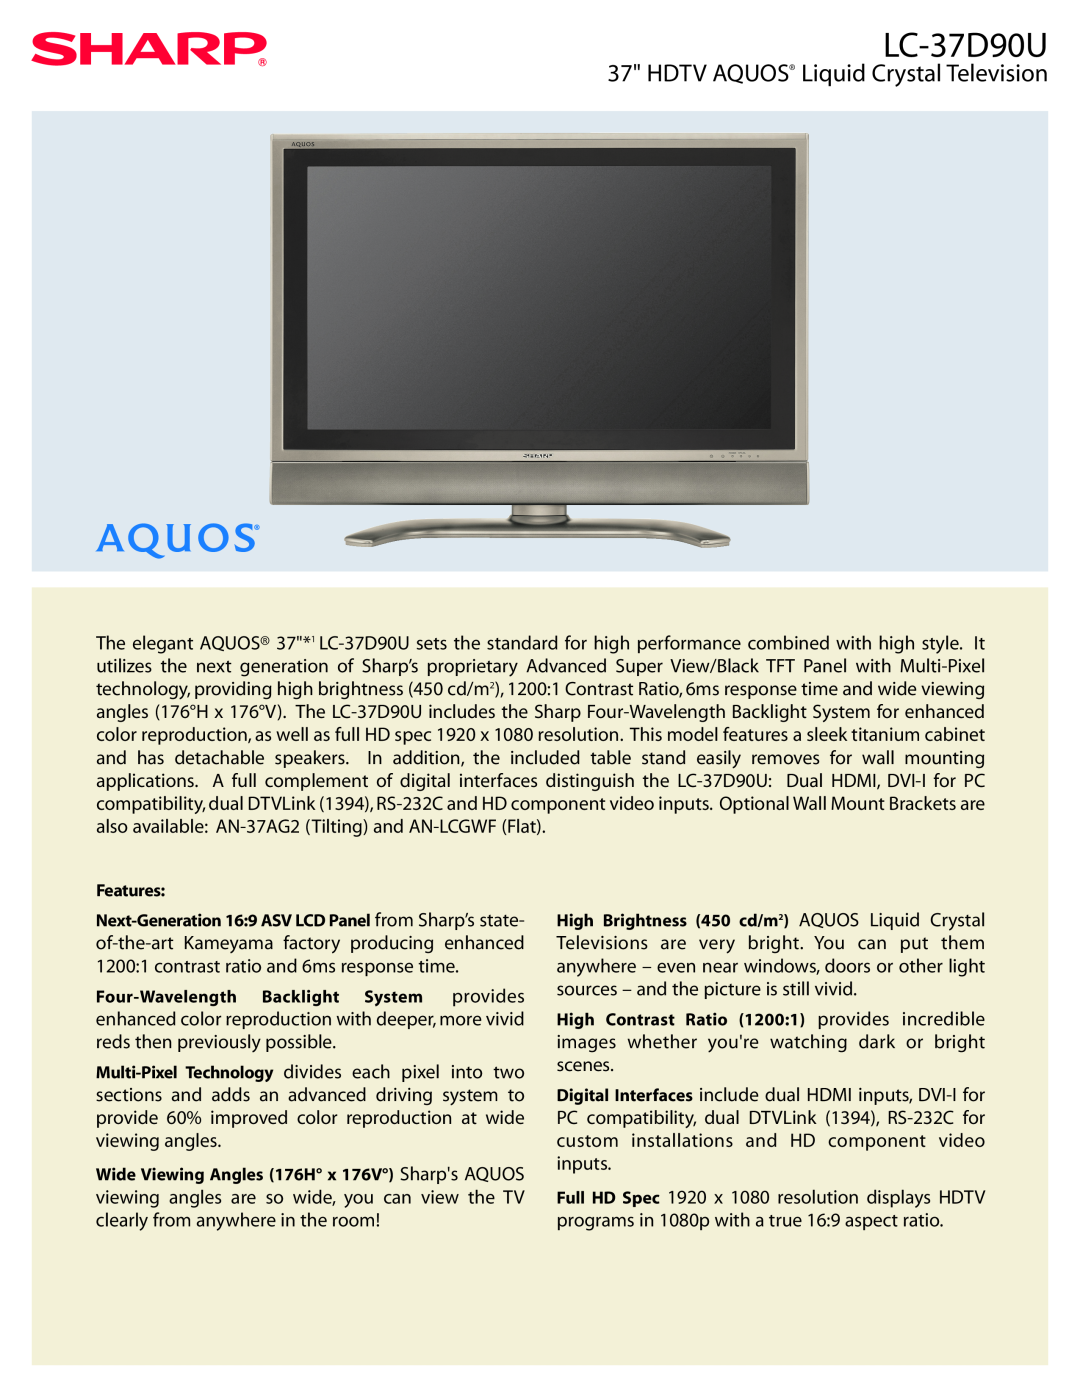 Sharp LC-37D90U manual HDTV AQUOS Liquid Crystal Television 